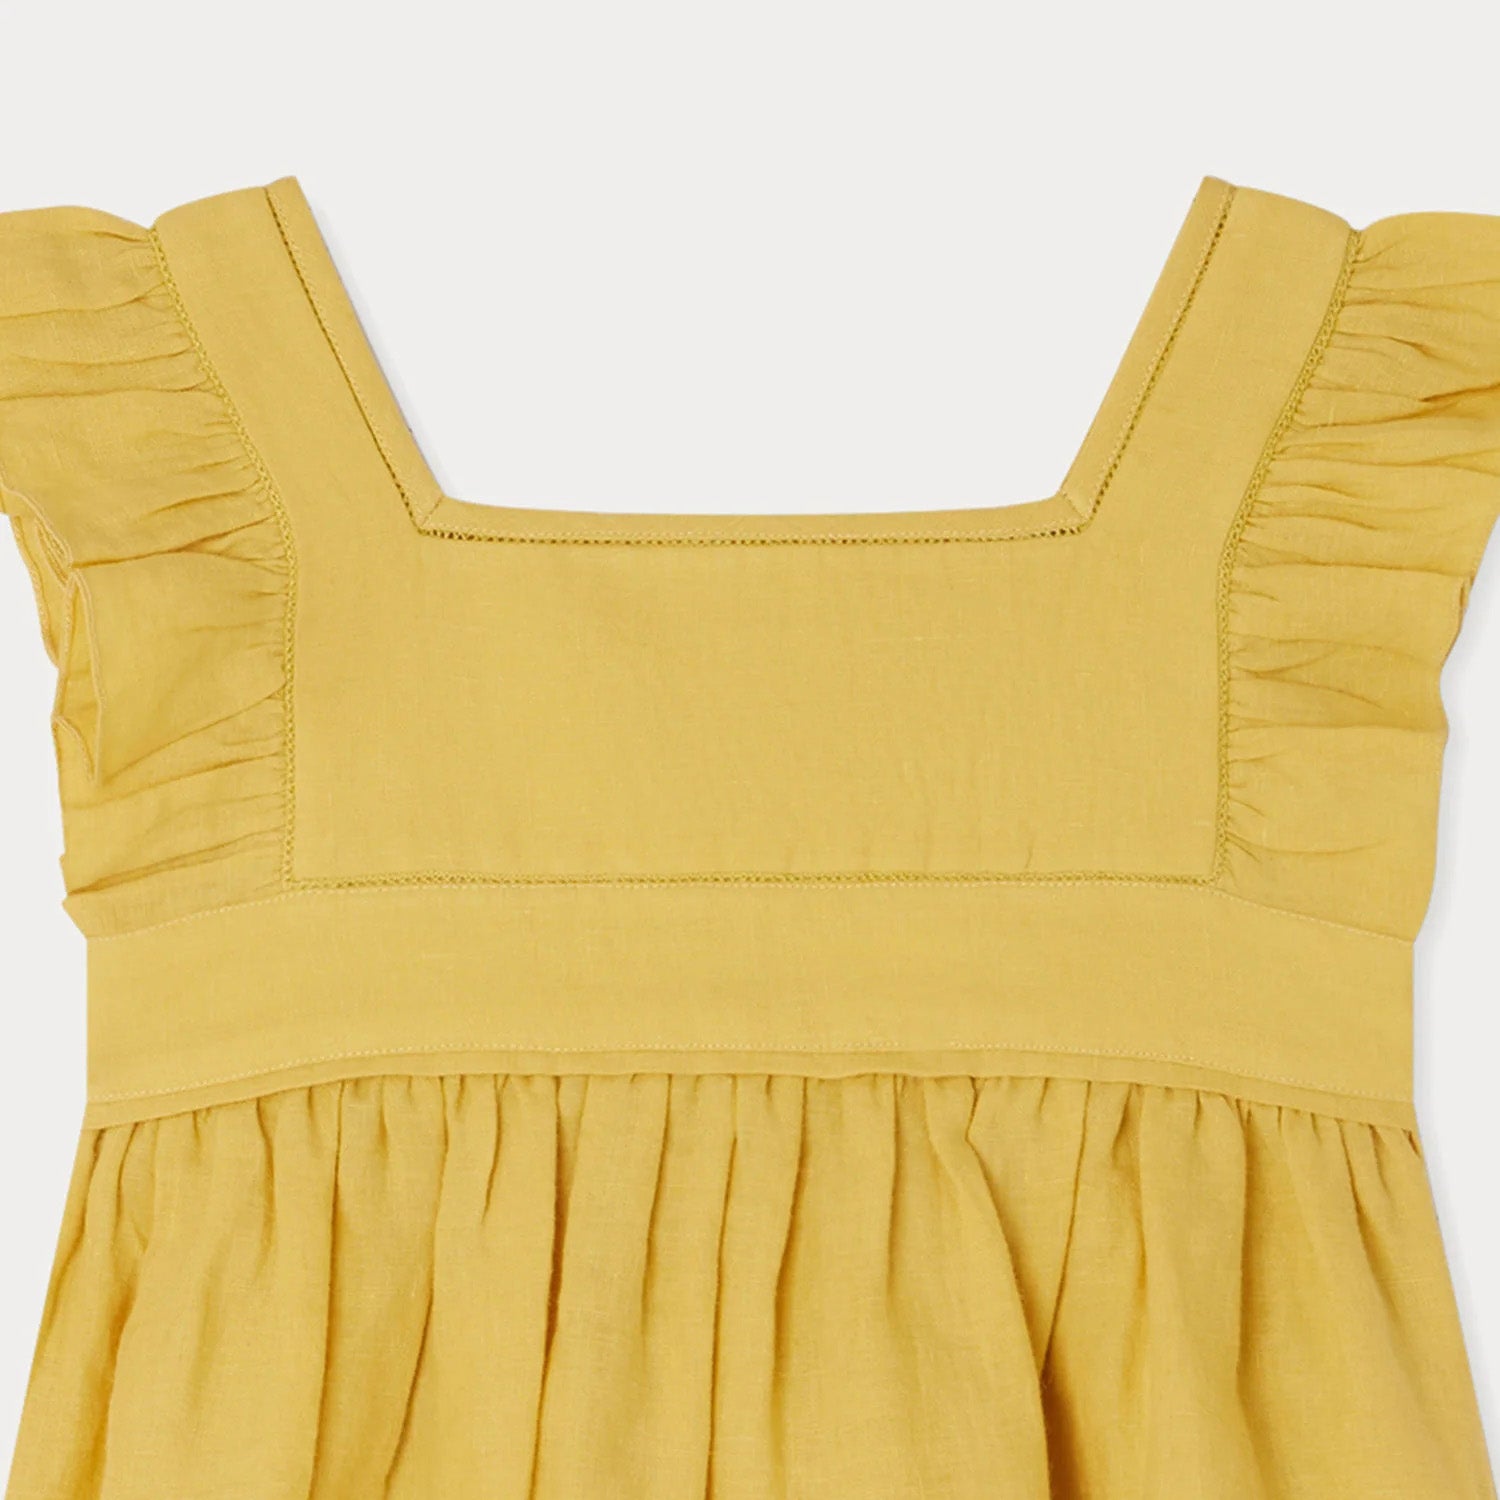 Girls Yellow Cotton Dress